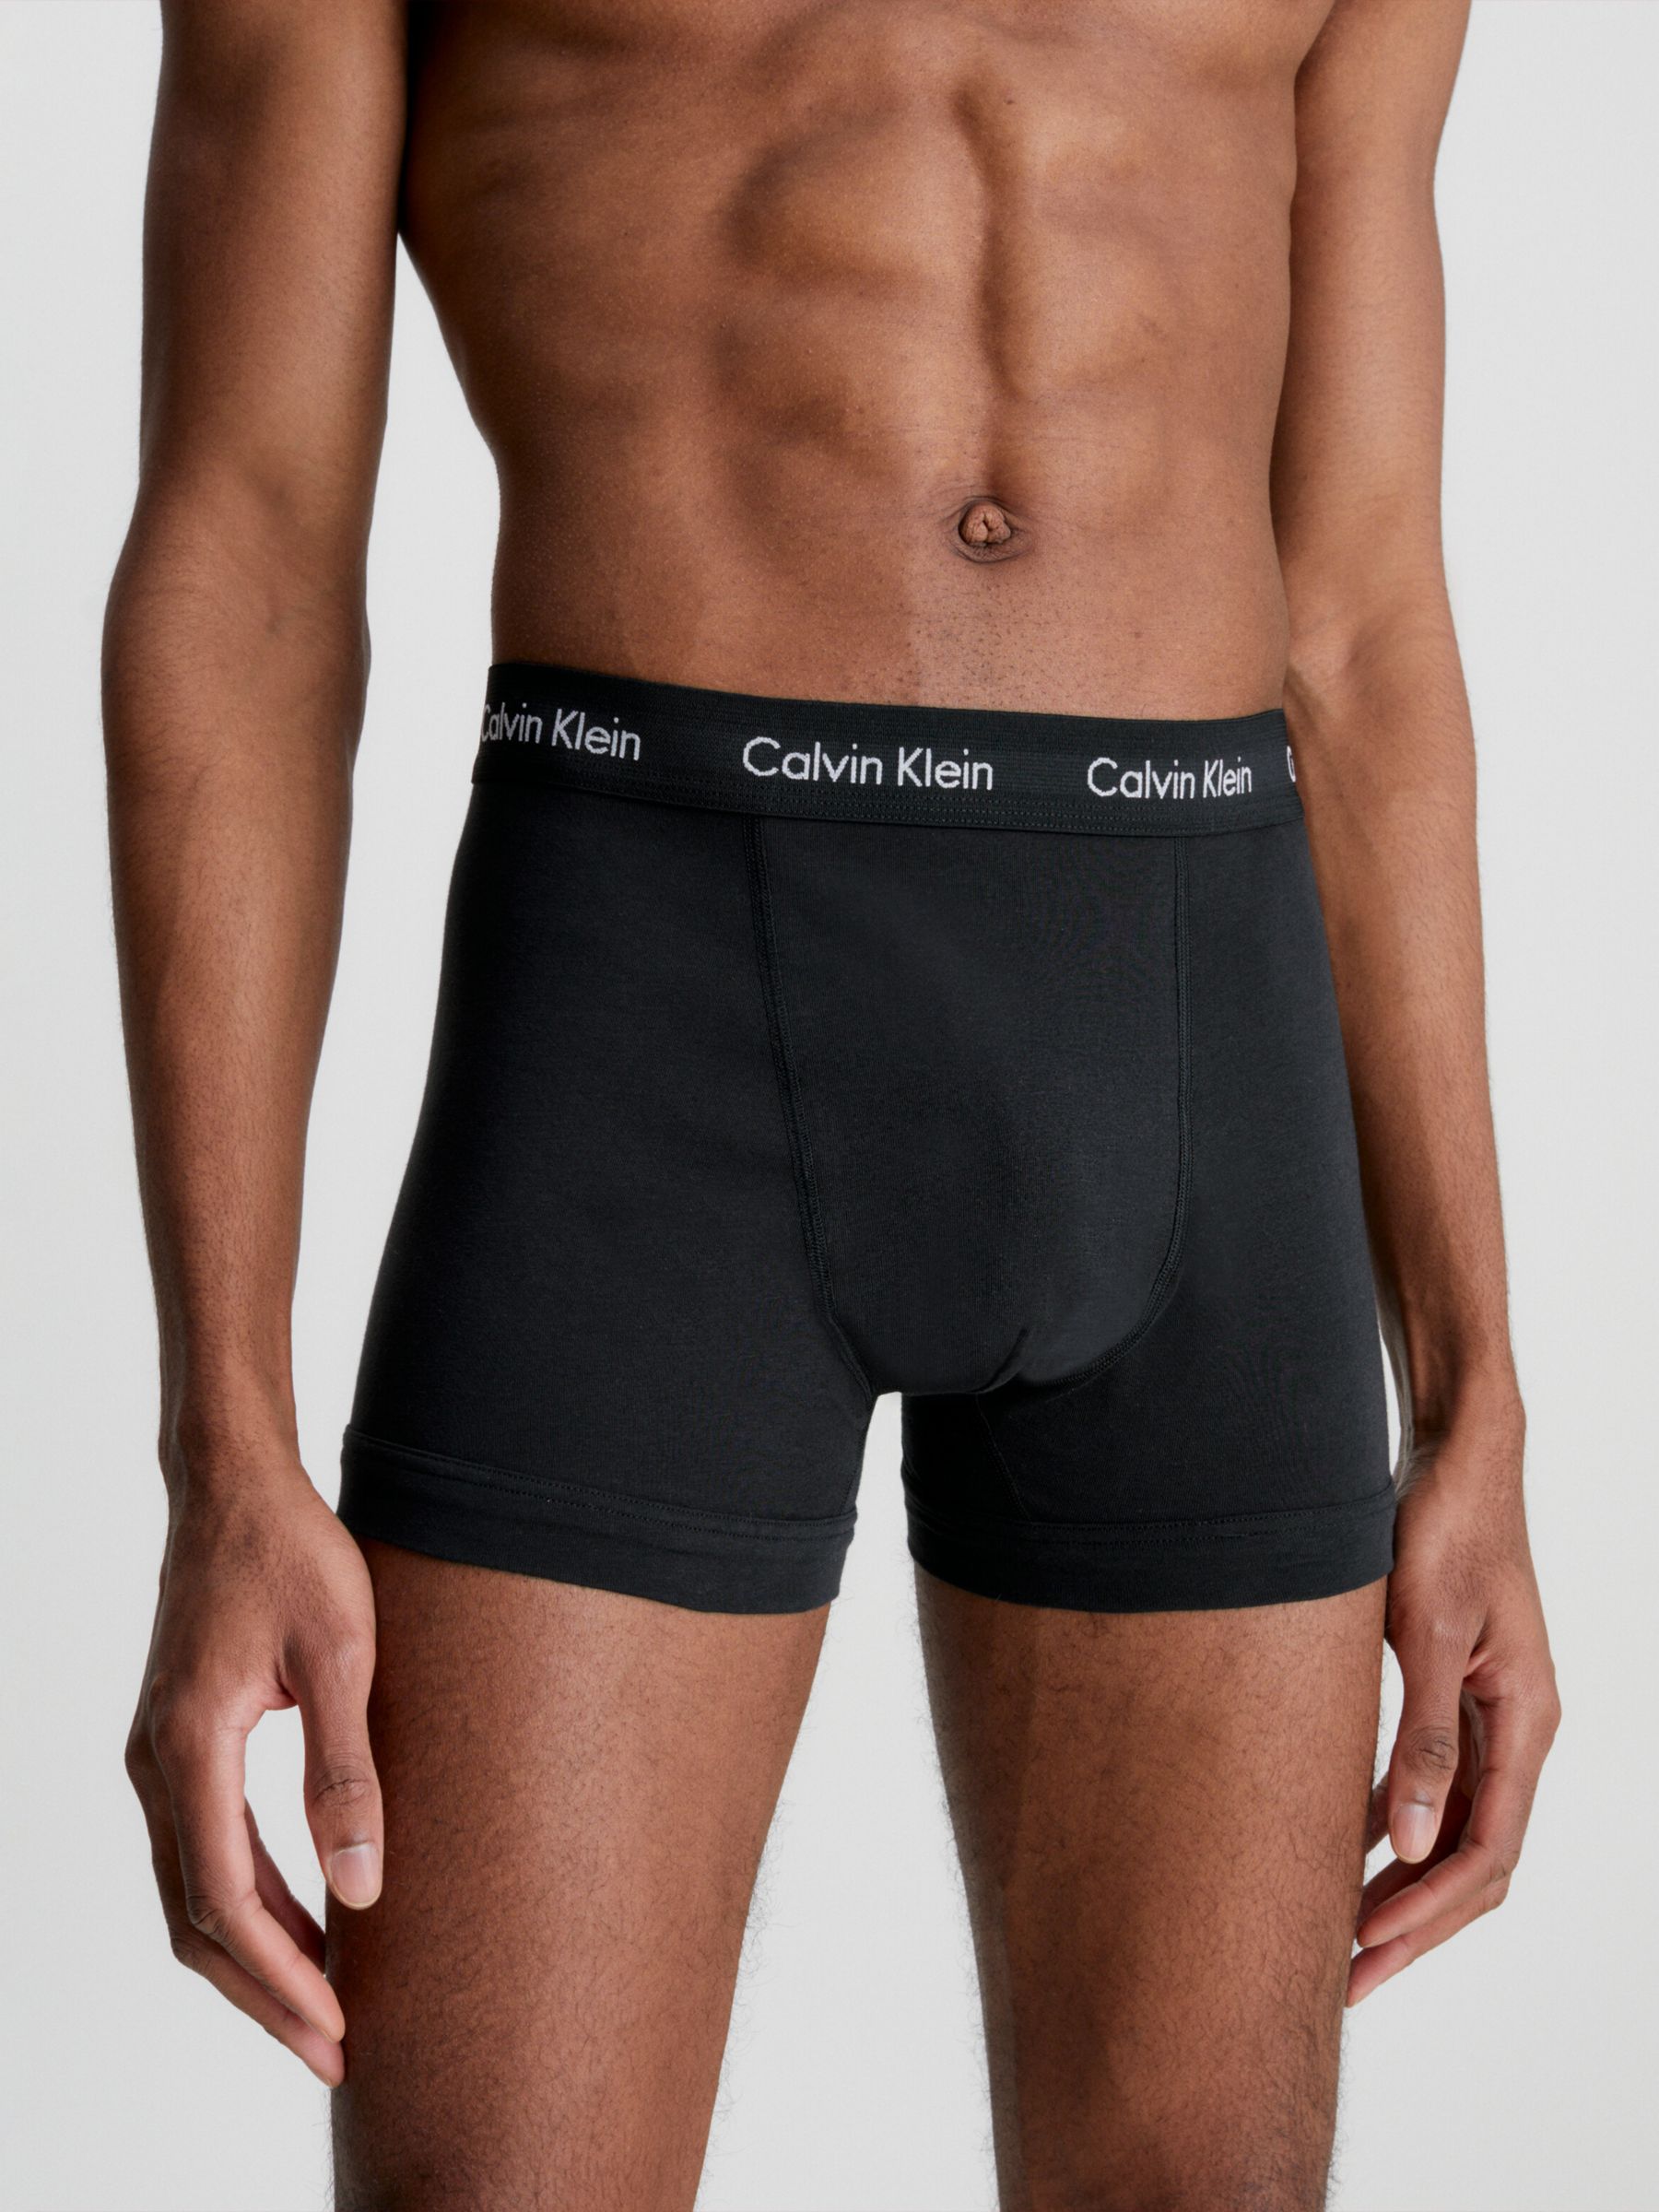 Calvin Klein Regular Cotton Stretch Trunks, Pack of 3, Black, S